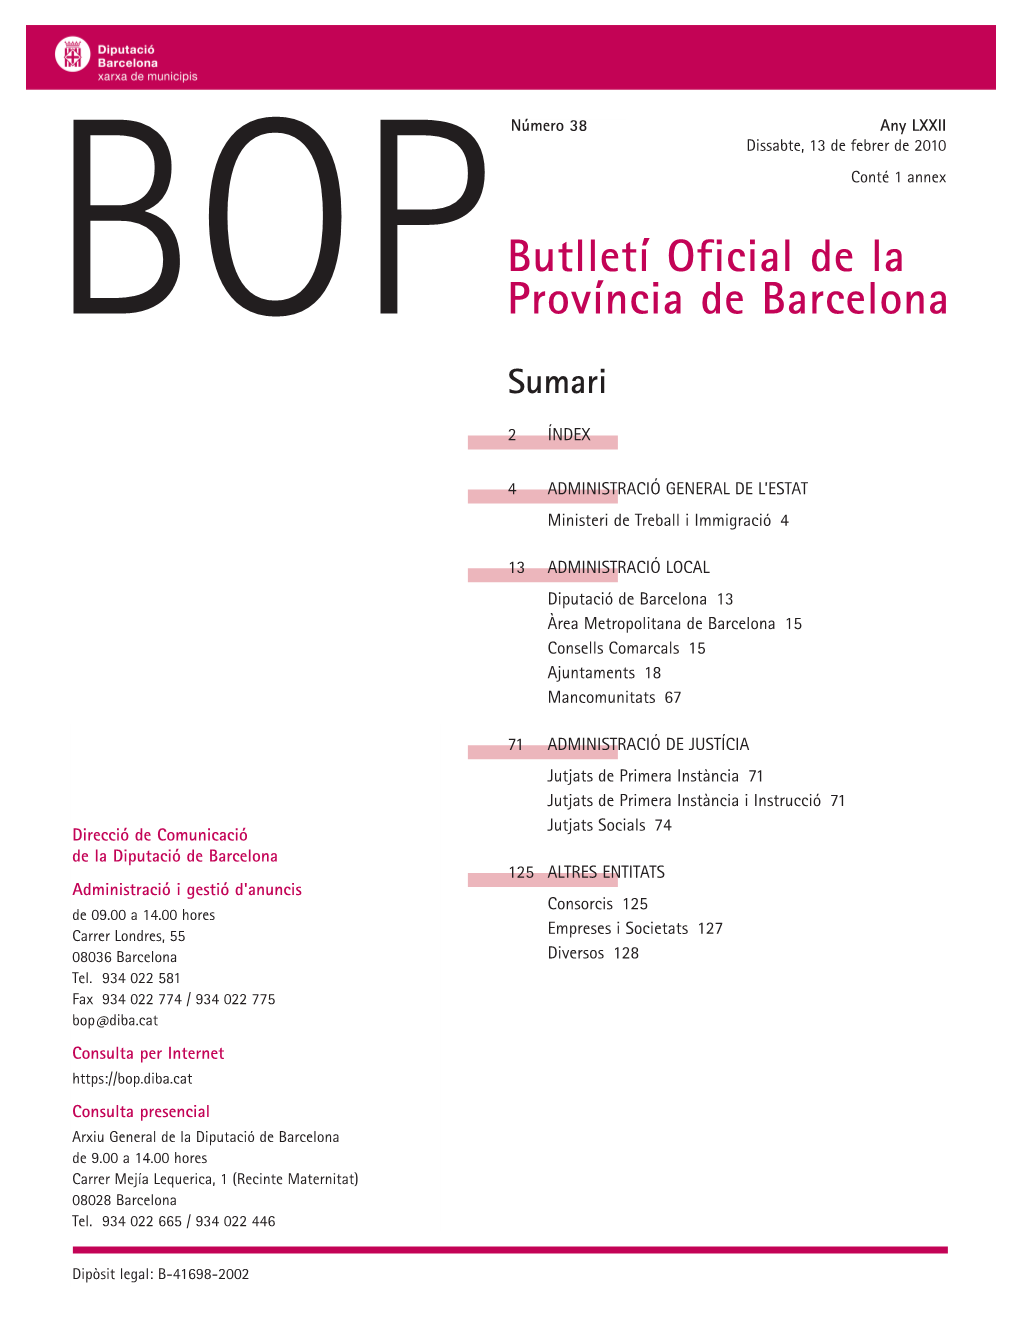 Butlletí Oficial De La Província De Barcelona 13 / 2 / 2010